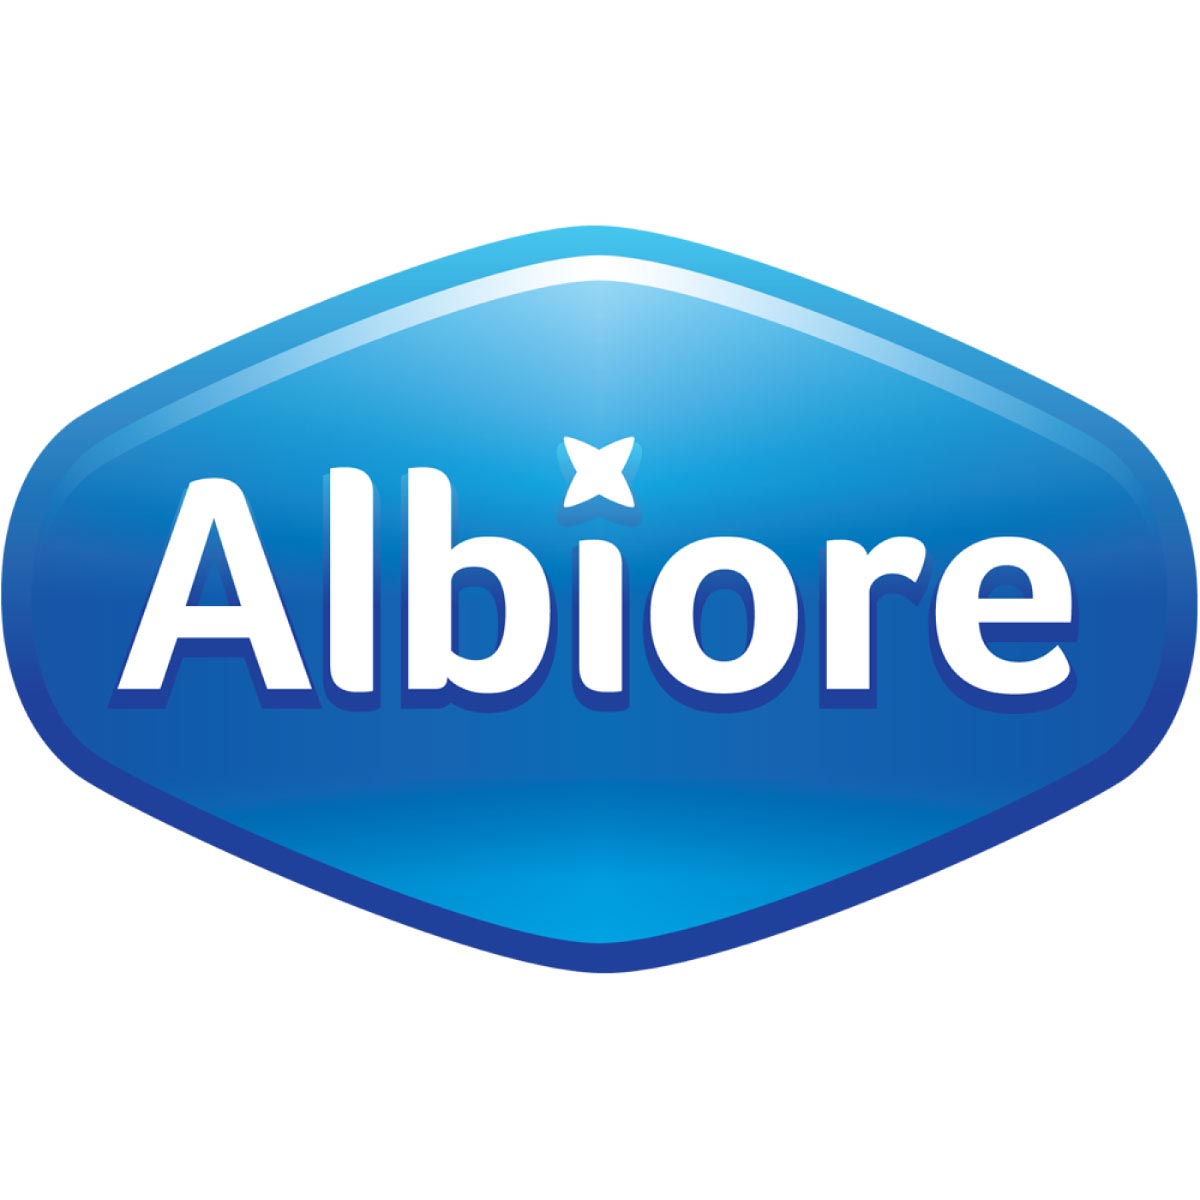 Albiore